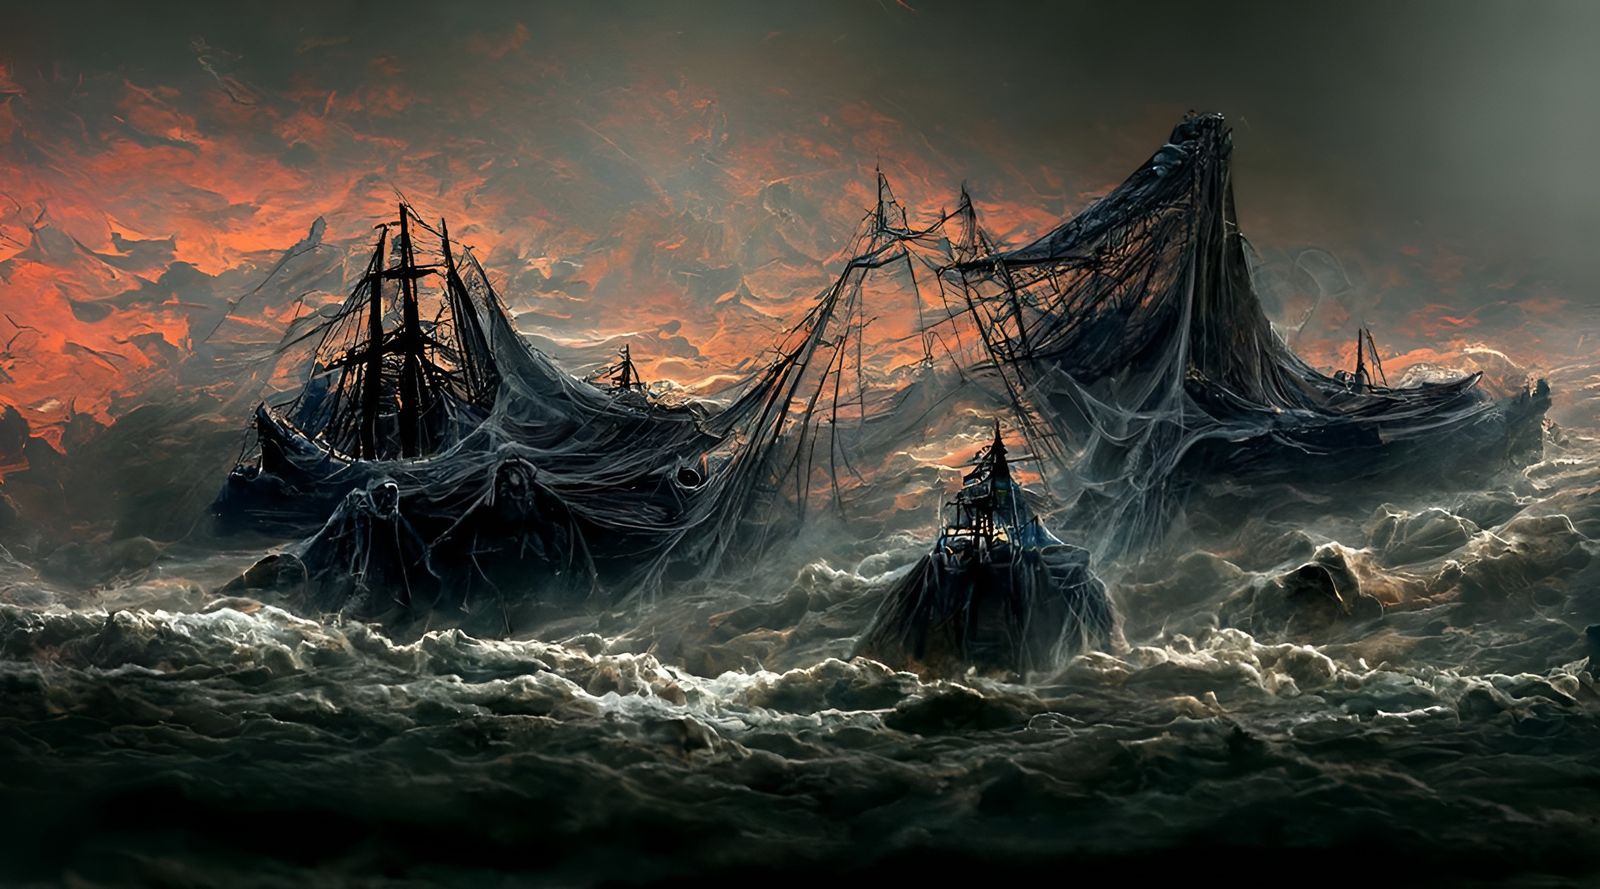 Sailing through Hell